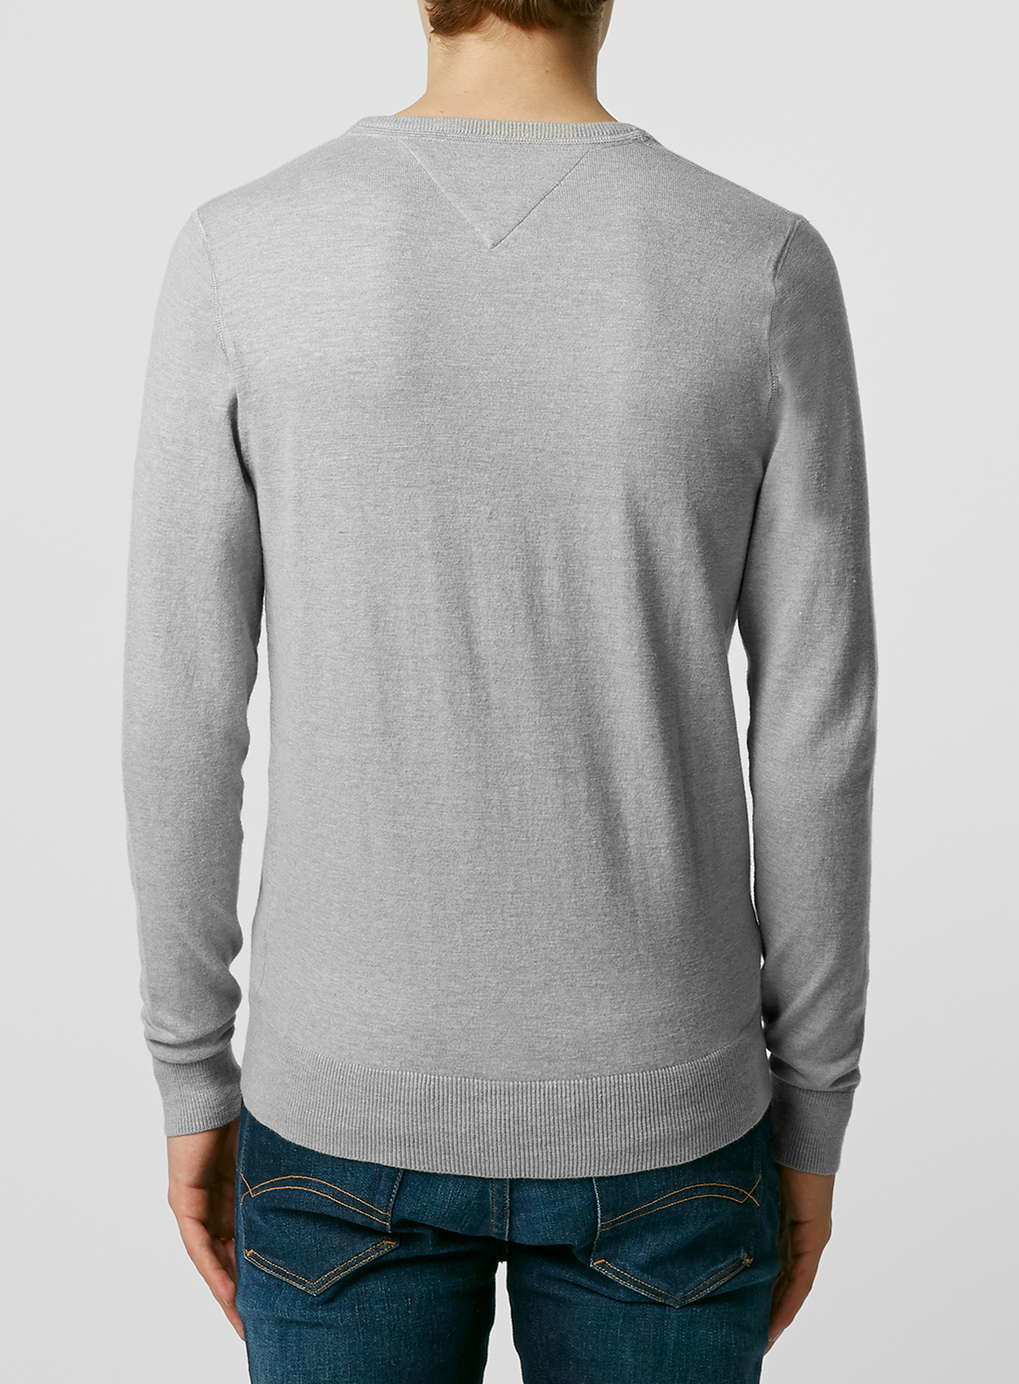 Tommy Hilfiger Hilfiger Denim Grey Sweatshirt in Gray for Men - Lyst